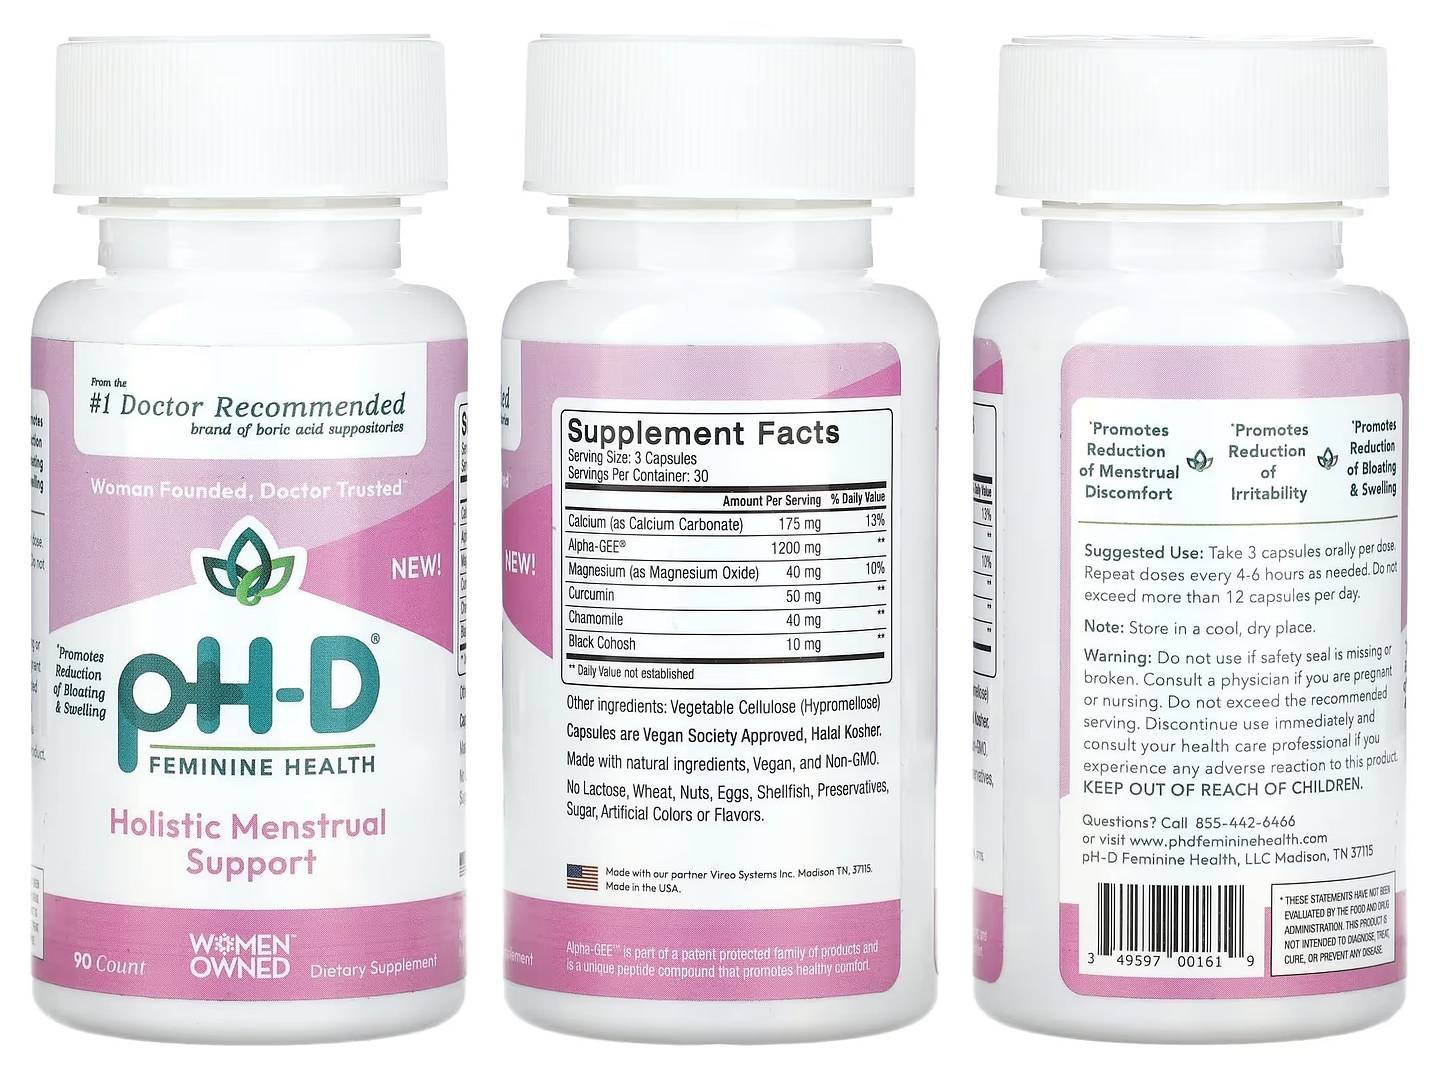 pH-D Feminine Health, Holistic Menstrual Support packaging